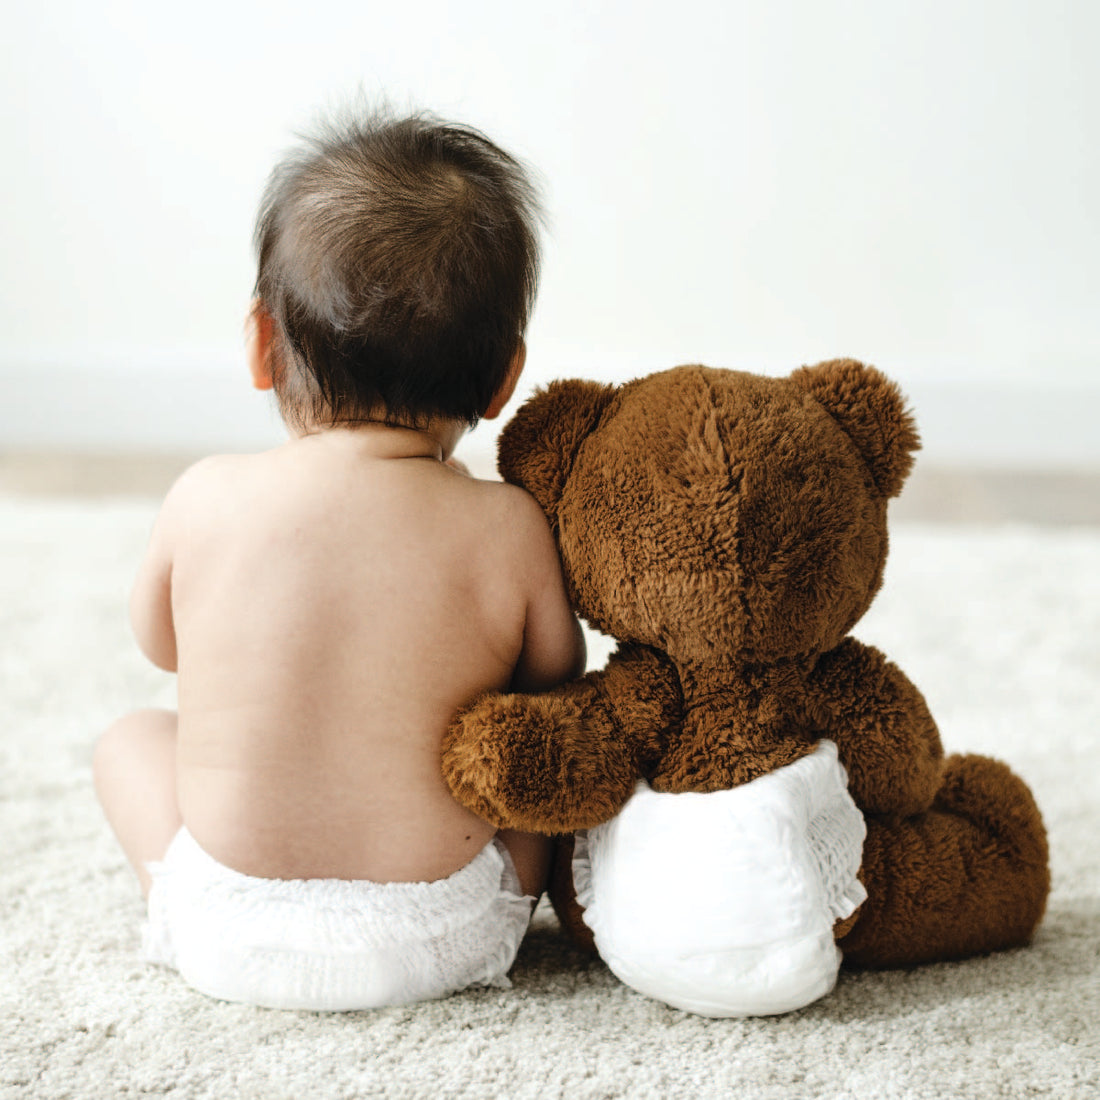 Baby and Stuffed bear hugging.